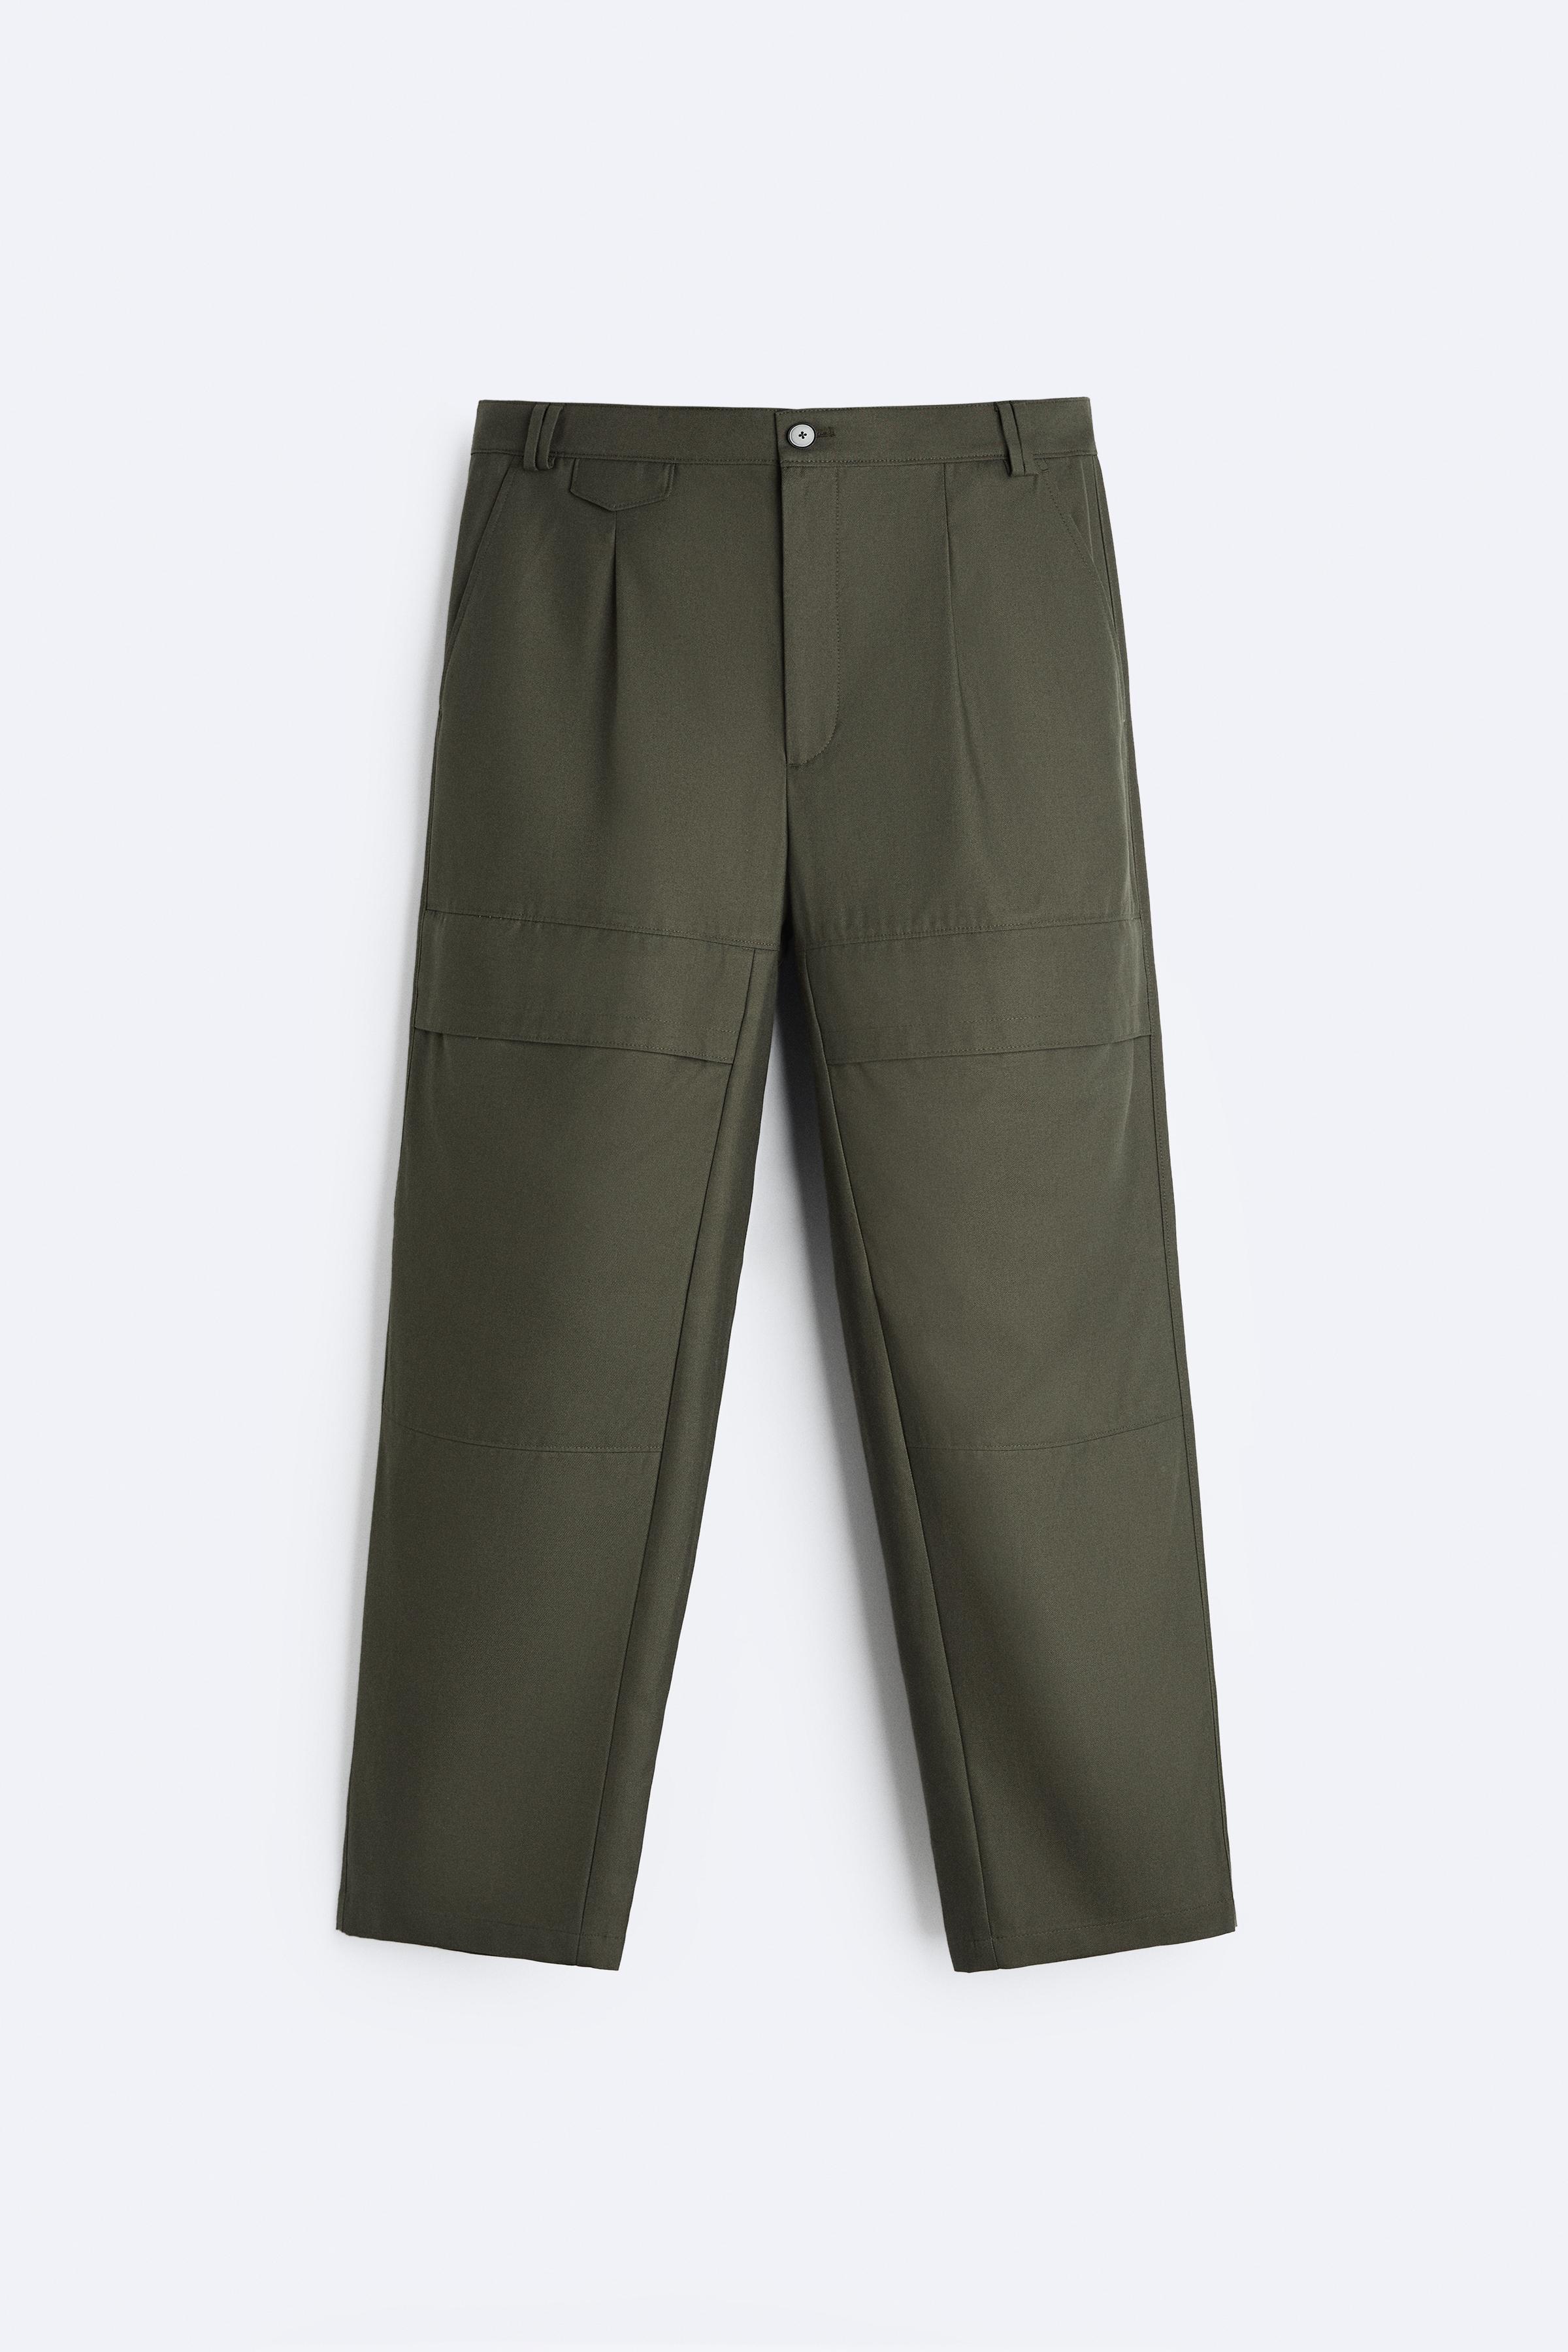 ZARA Olive Green Utility Pants